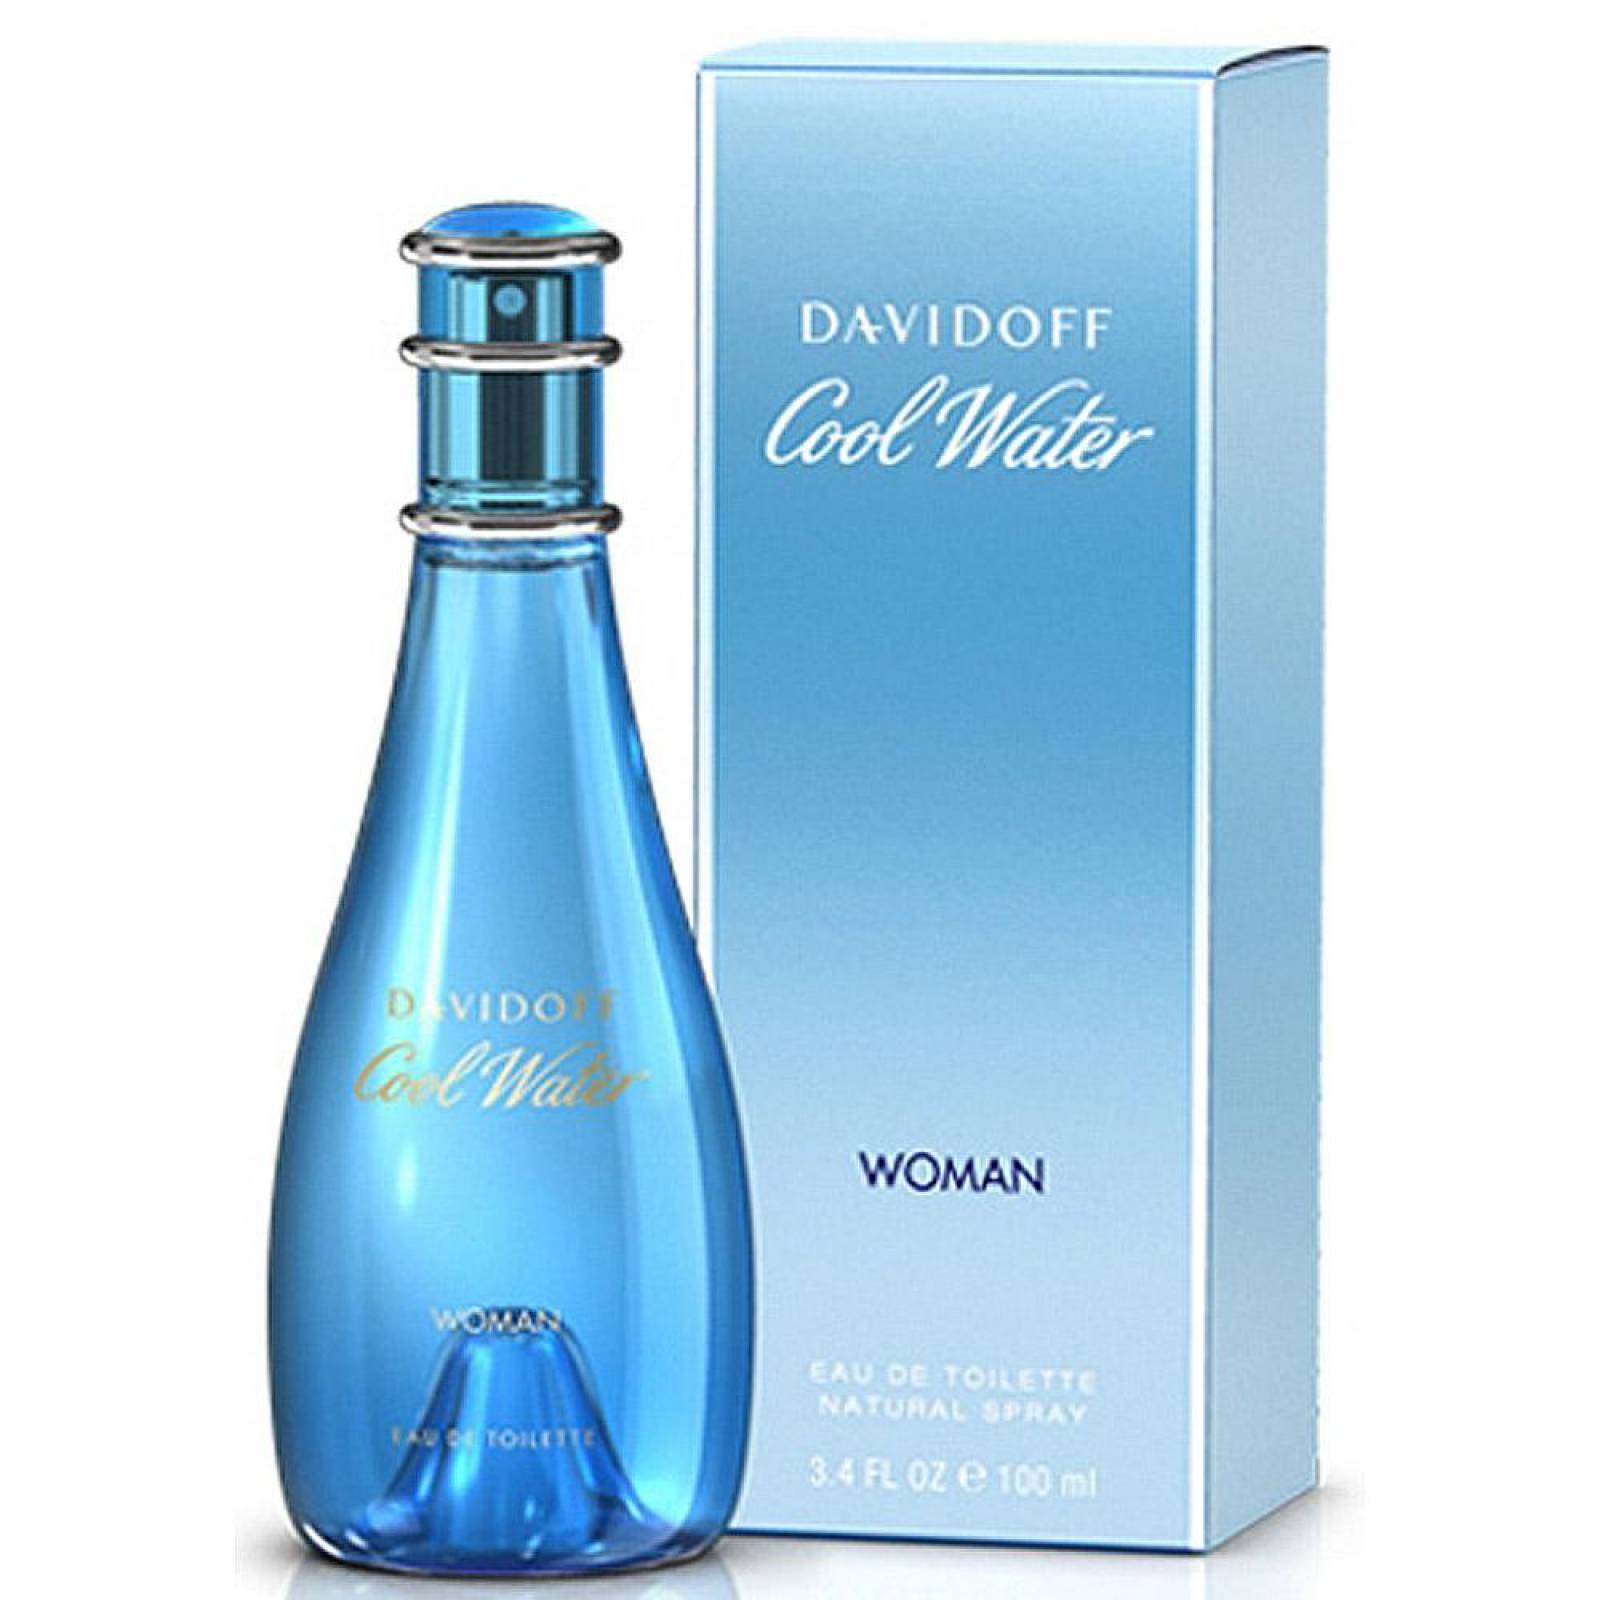 Cool Water Woman De Davidoff Eau De Toilette 100 ml